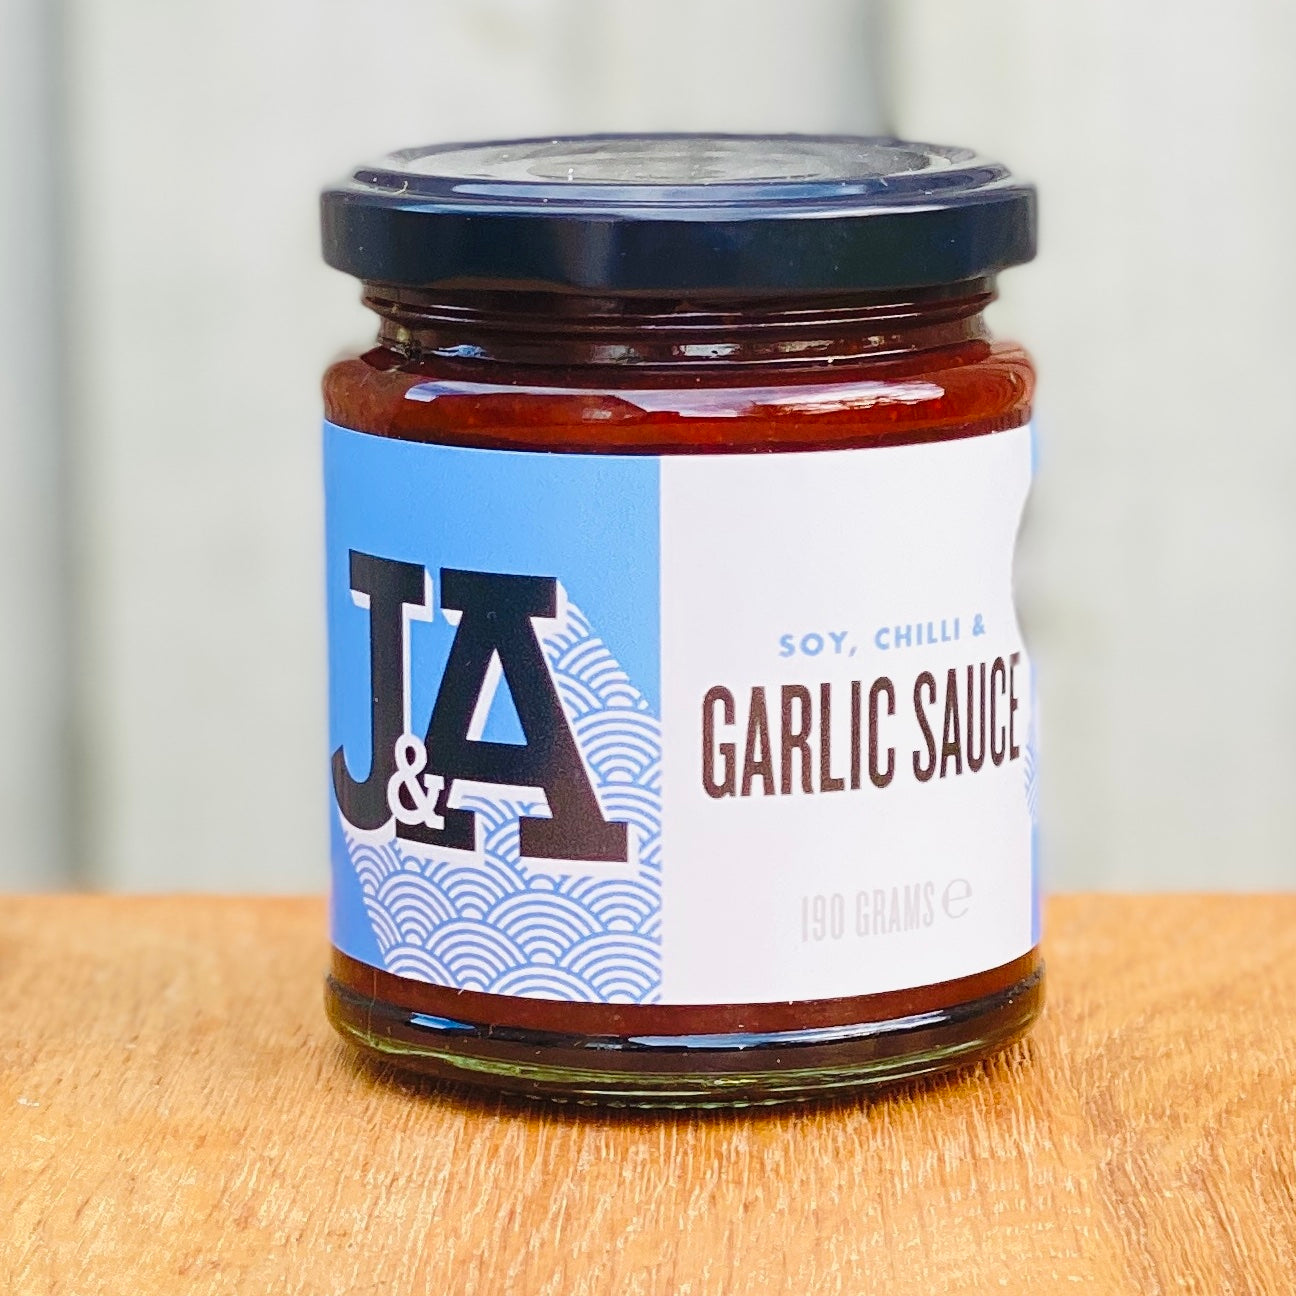 Janda Soy, Chilli & Garlic Sauce, 190g. Suitable as a stir fry sauce or marinade